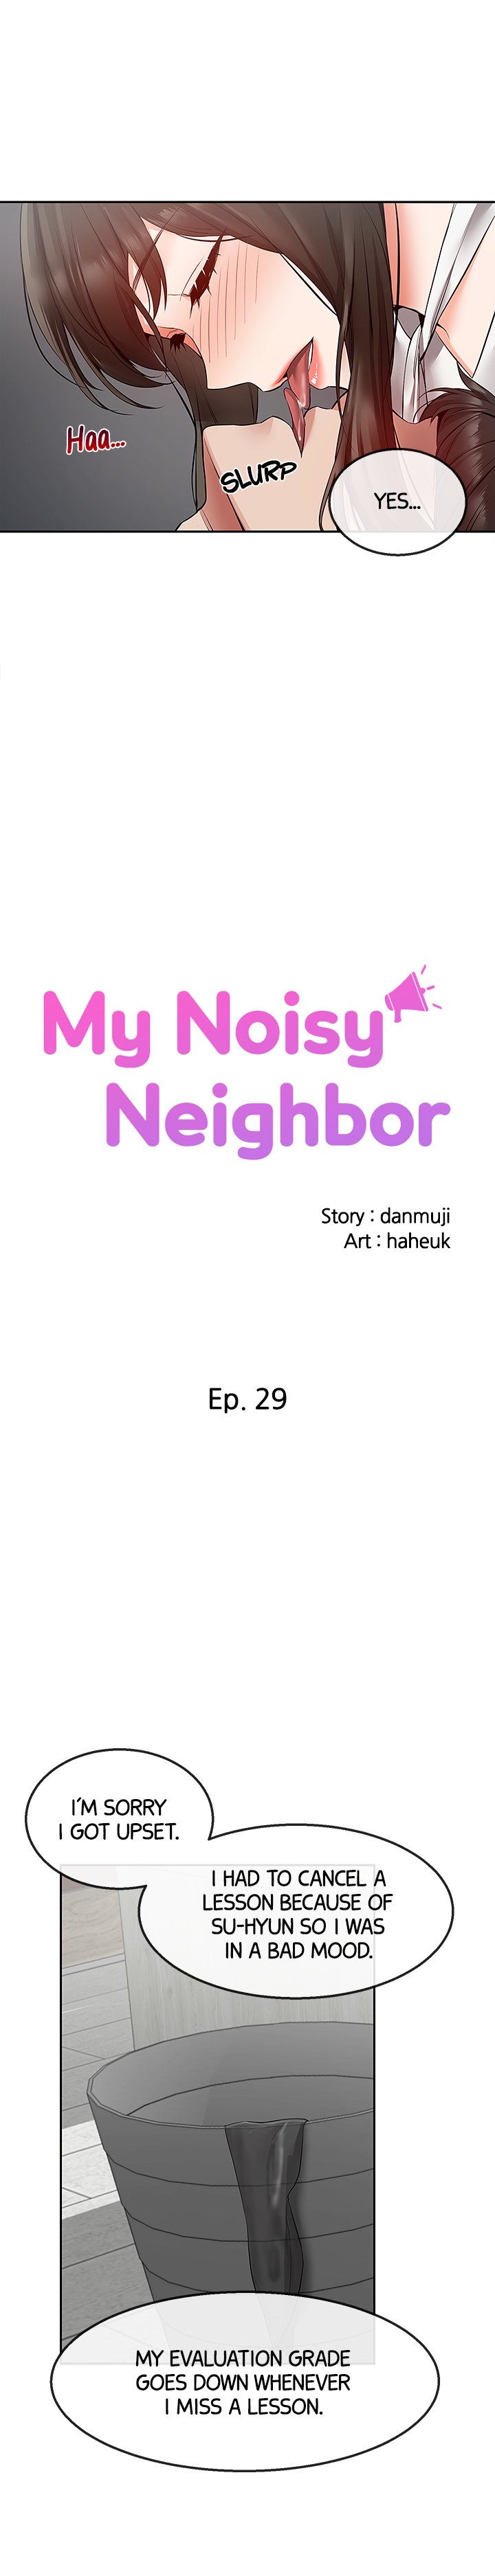 My Noisy Neighbor image